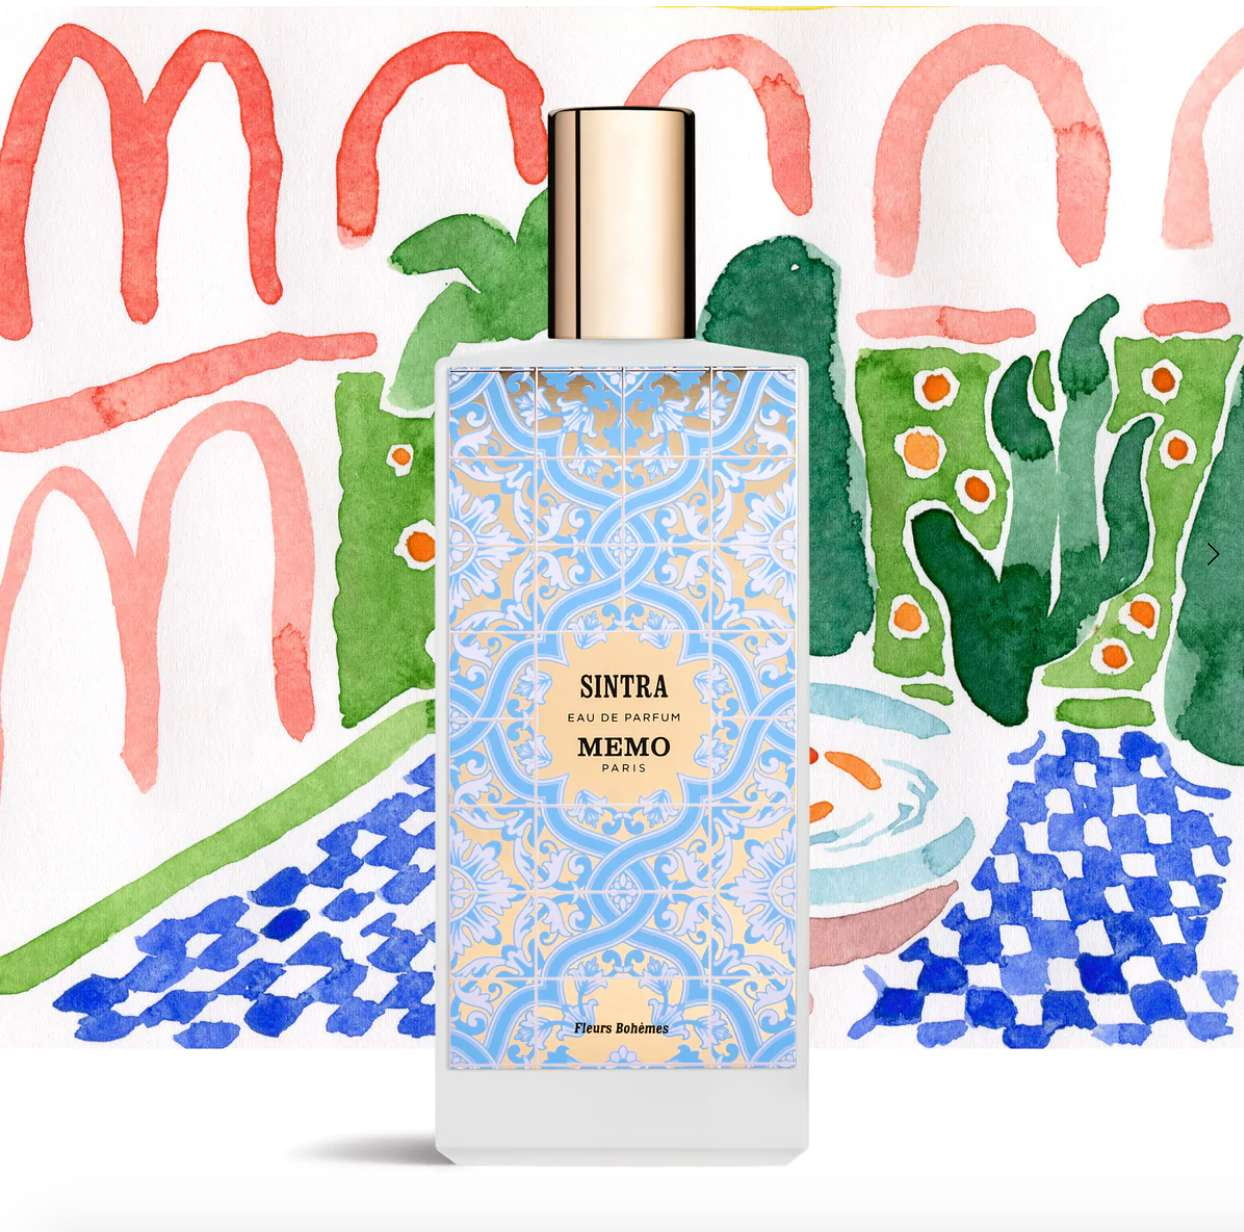 Sintra - MEMO Paris - INDIEHOUSE modern fragrances